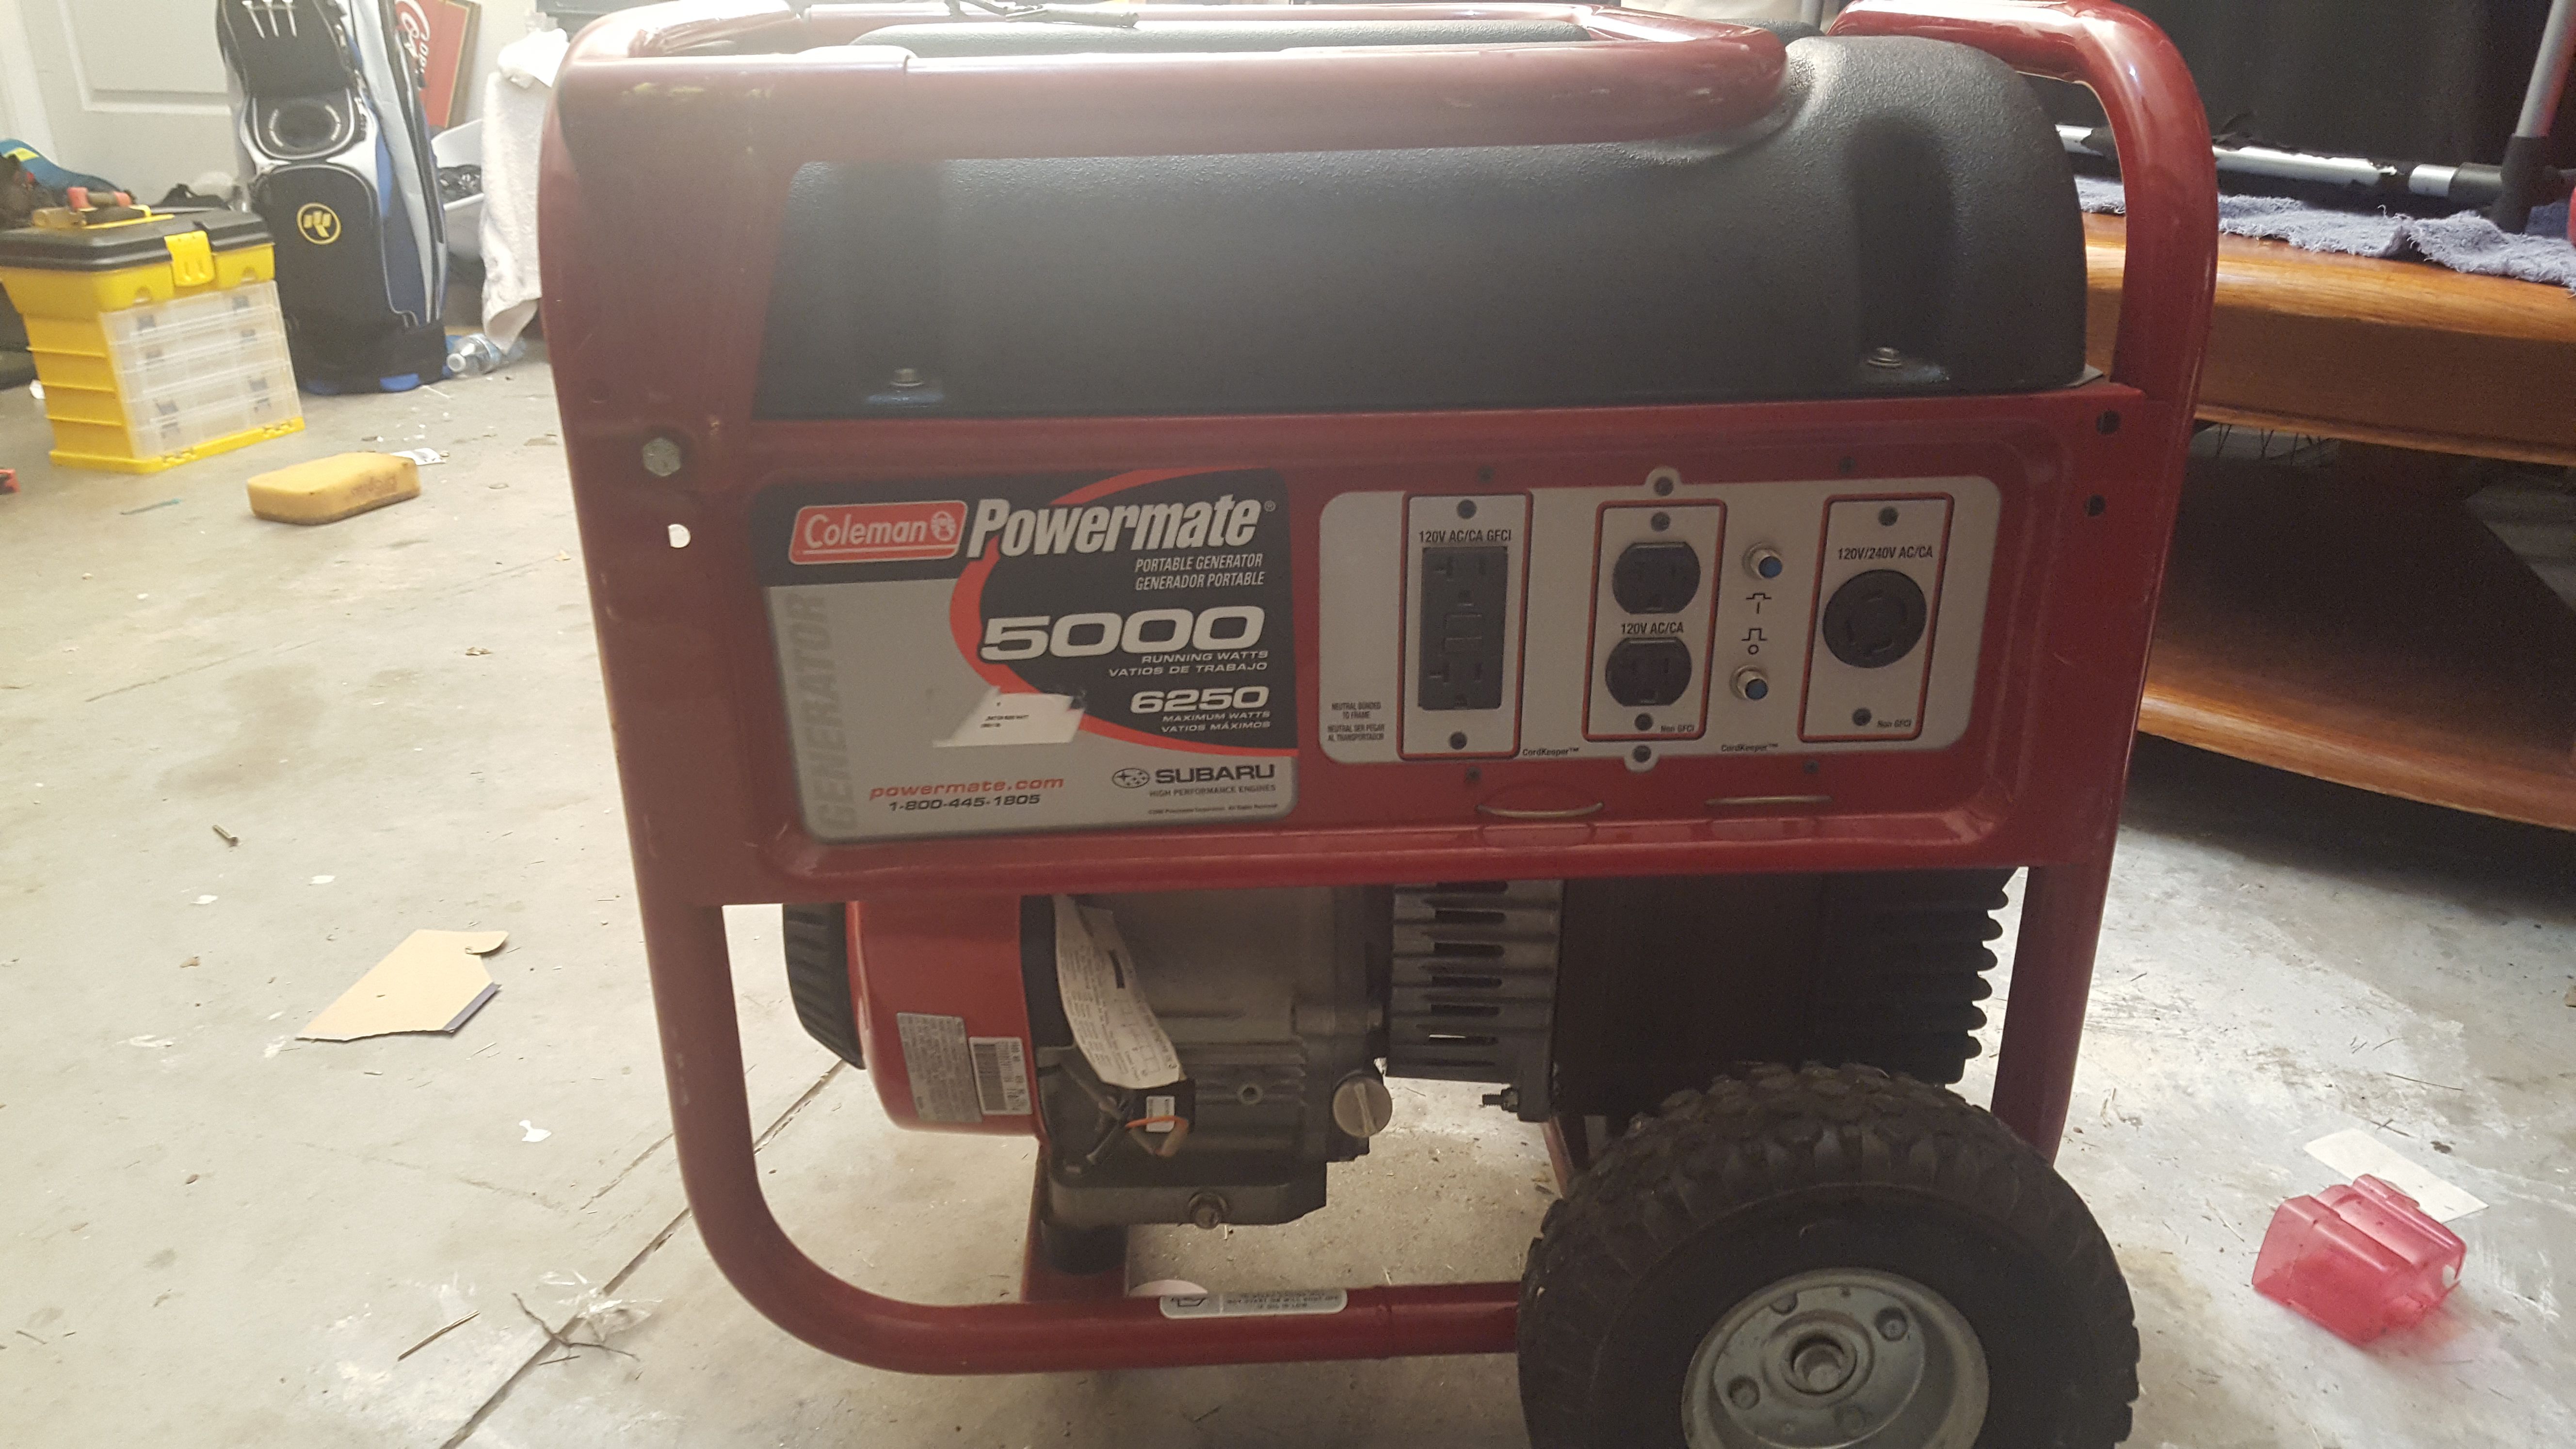 Generator coleman powermate 5000, 6250 watts